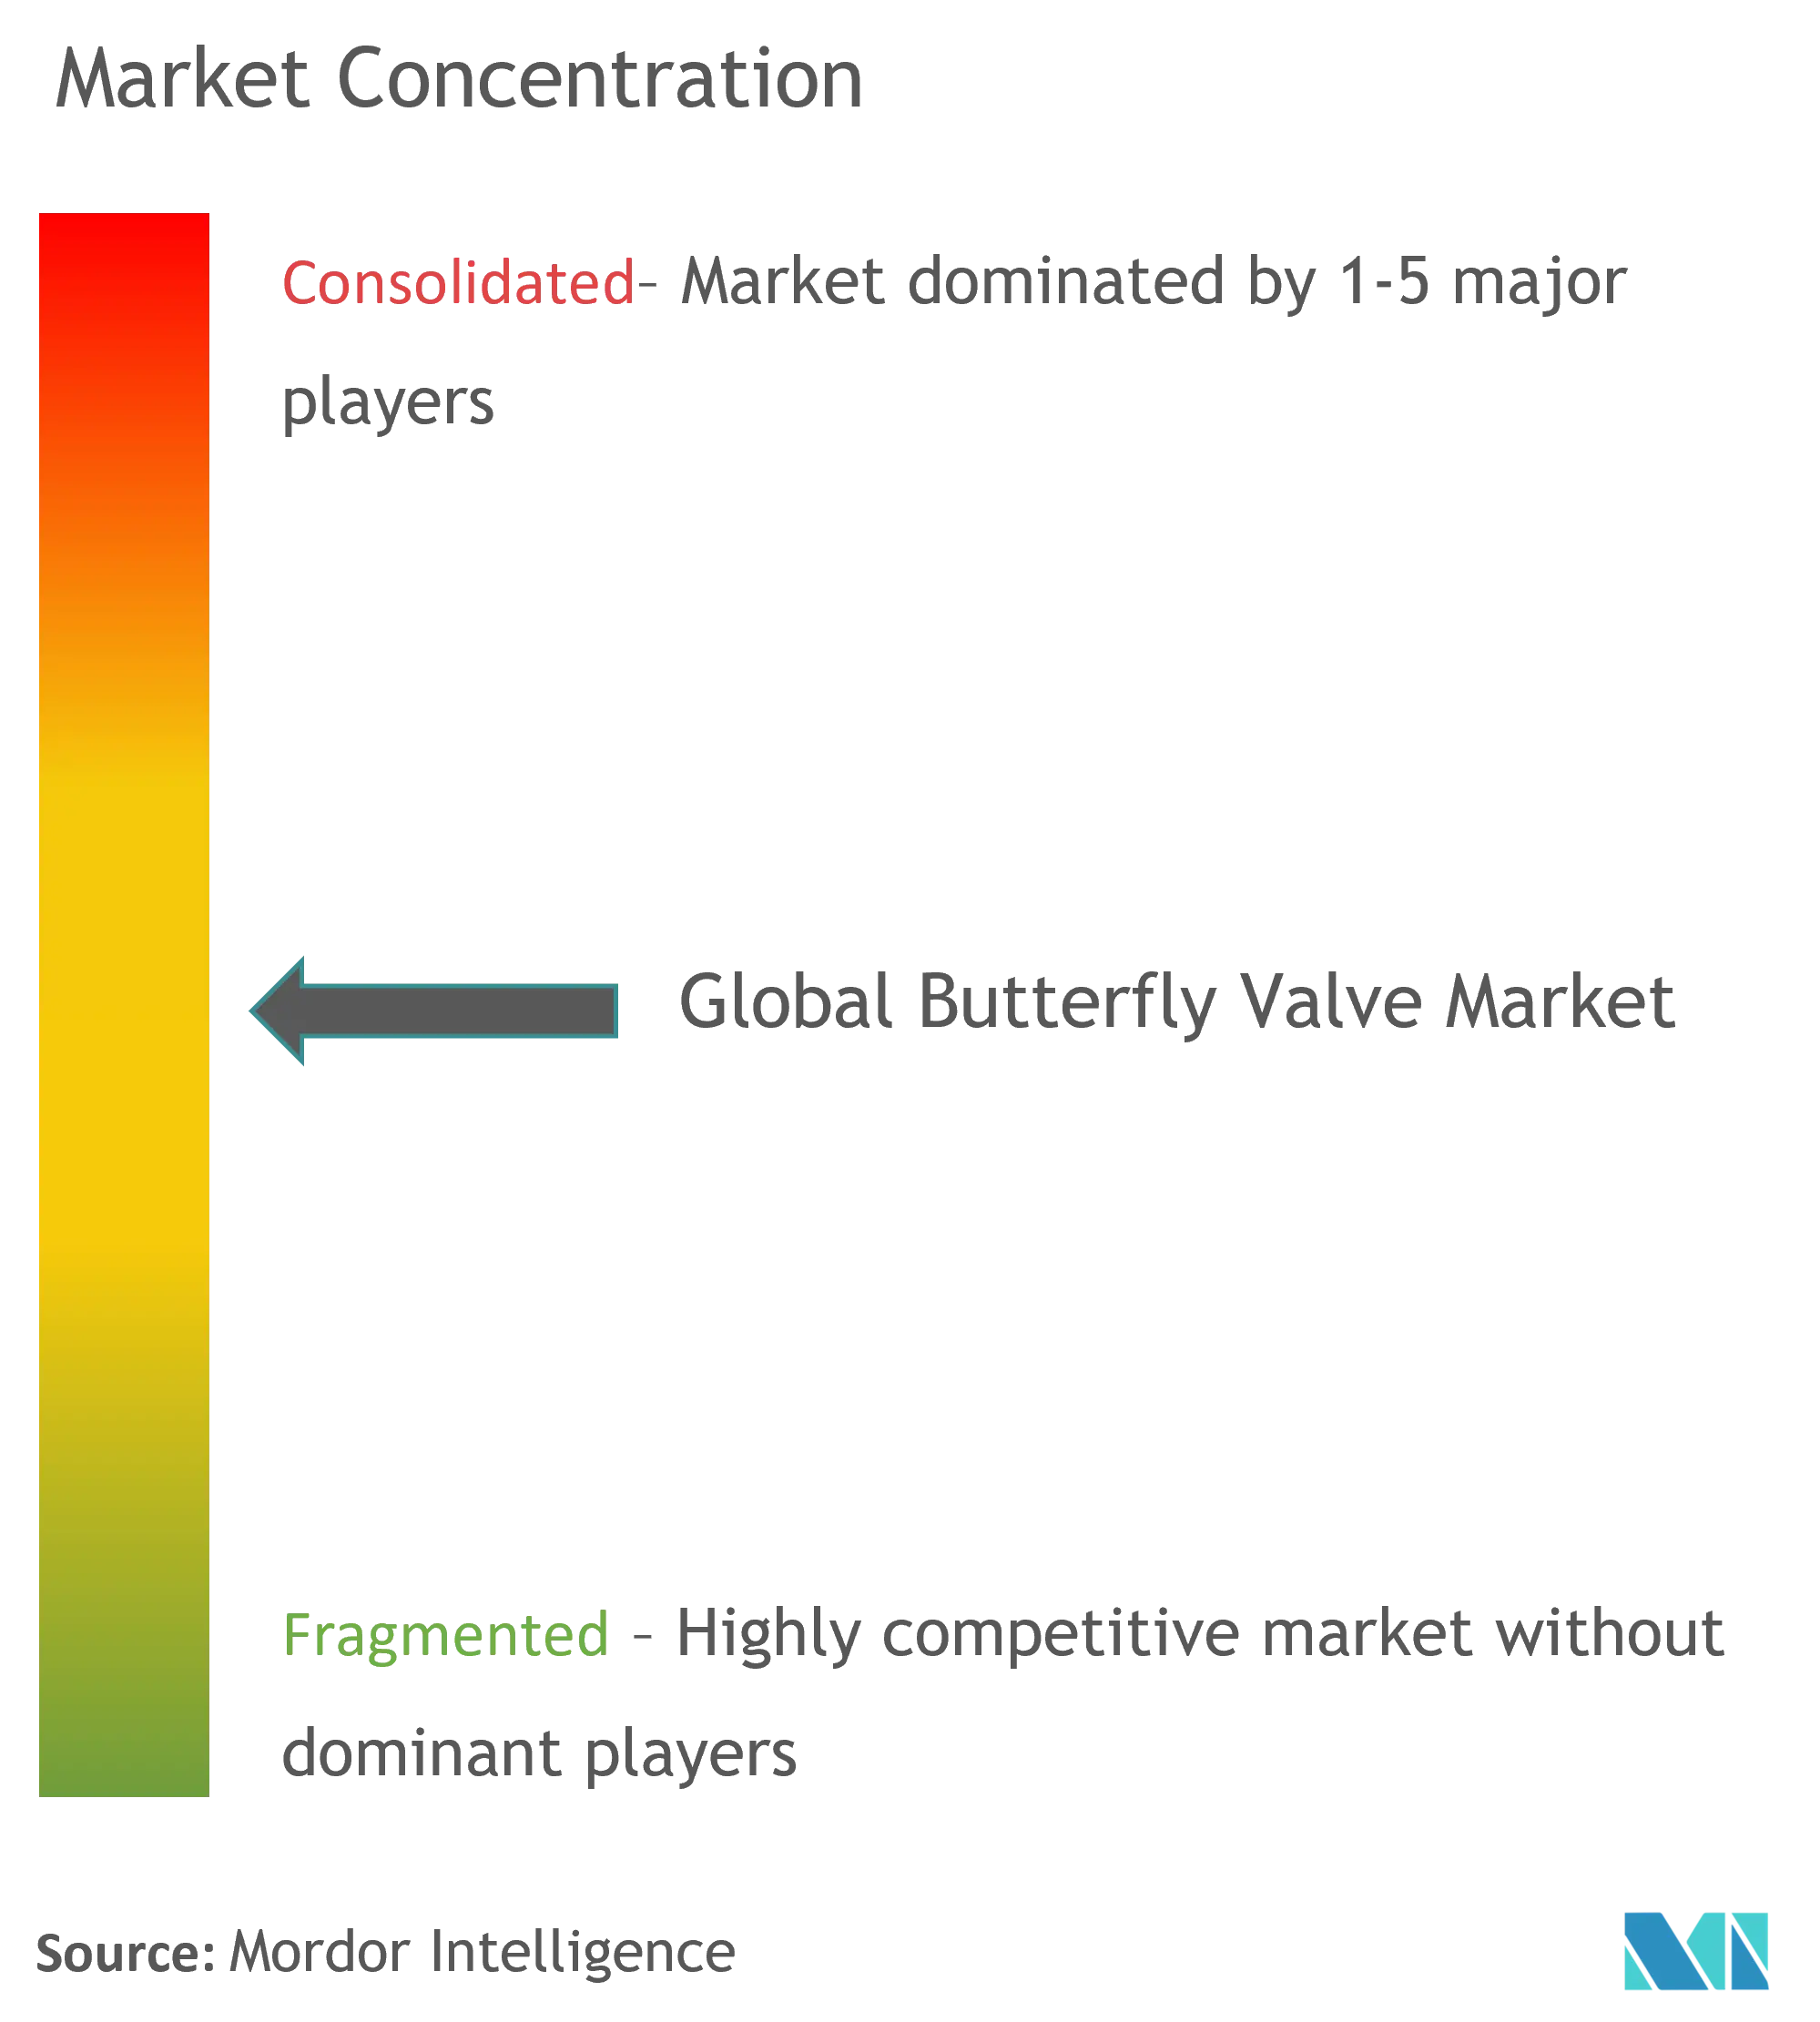 Global Butterfly Valve Market Concentration